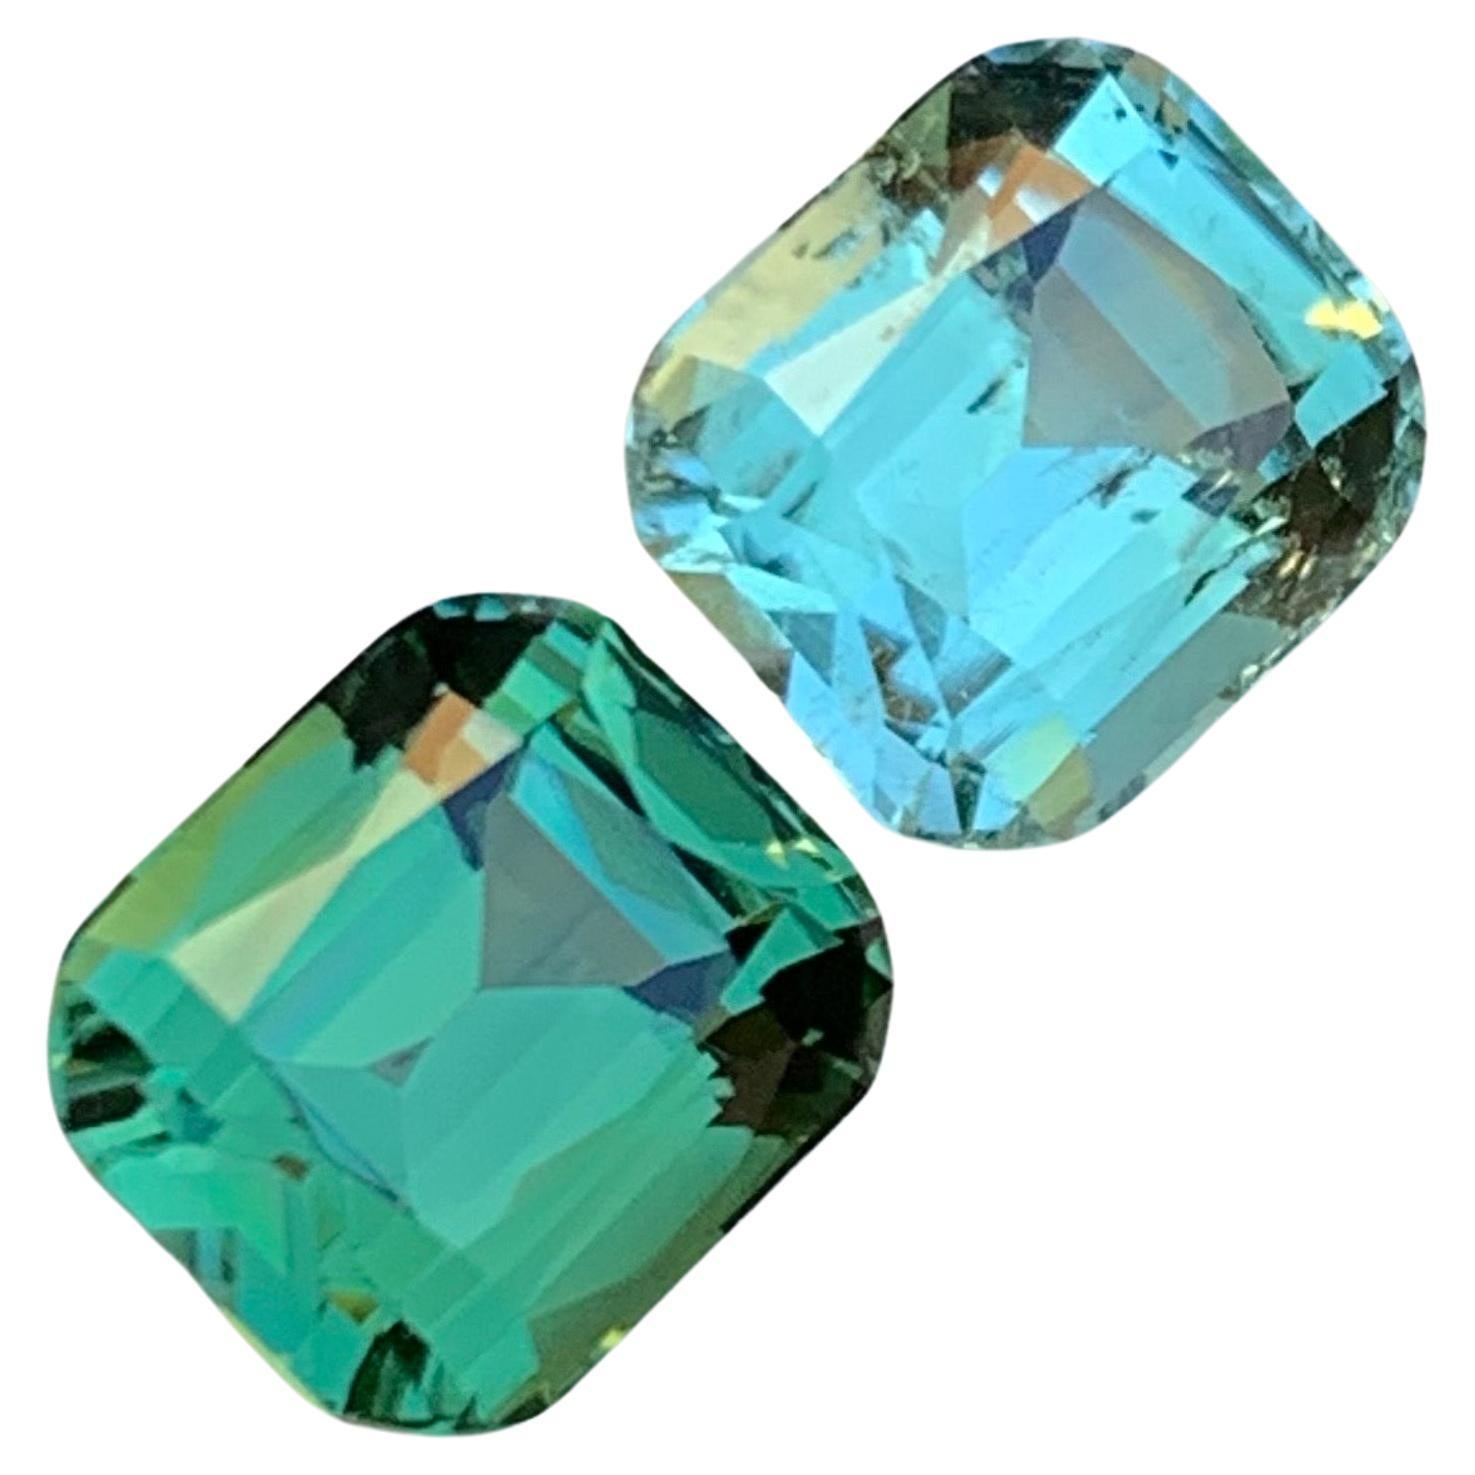 Seafoam & Bluish Green Natural Tourmaline Loose Gemstones reverse pair, 3.85 Ct For Sale